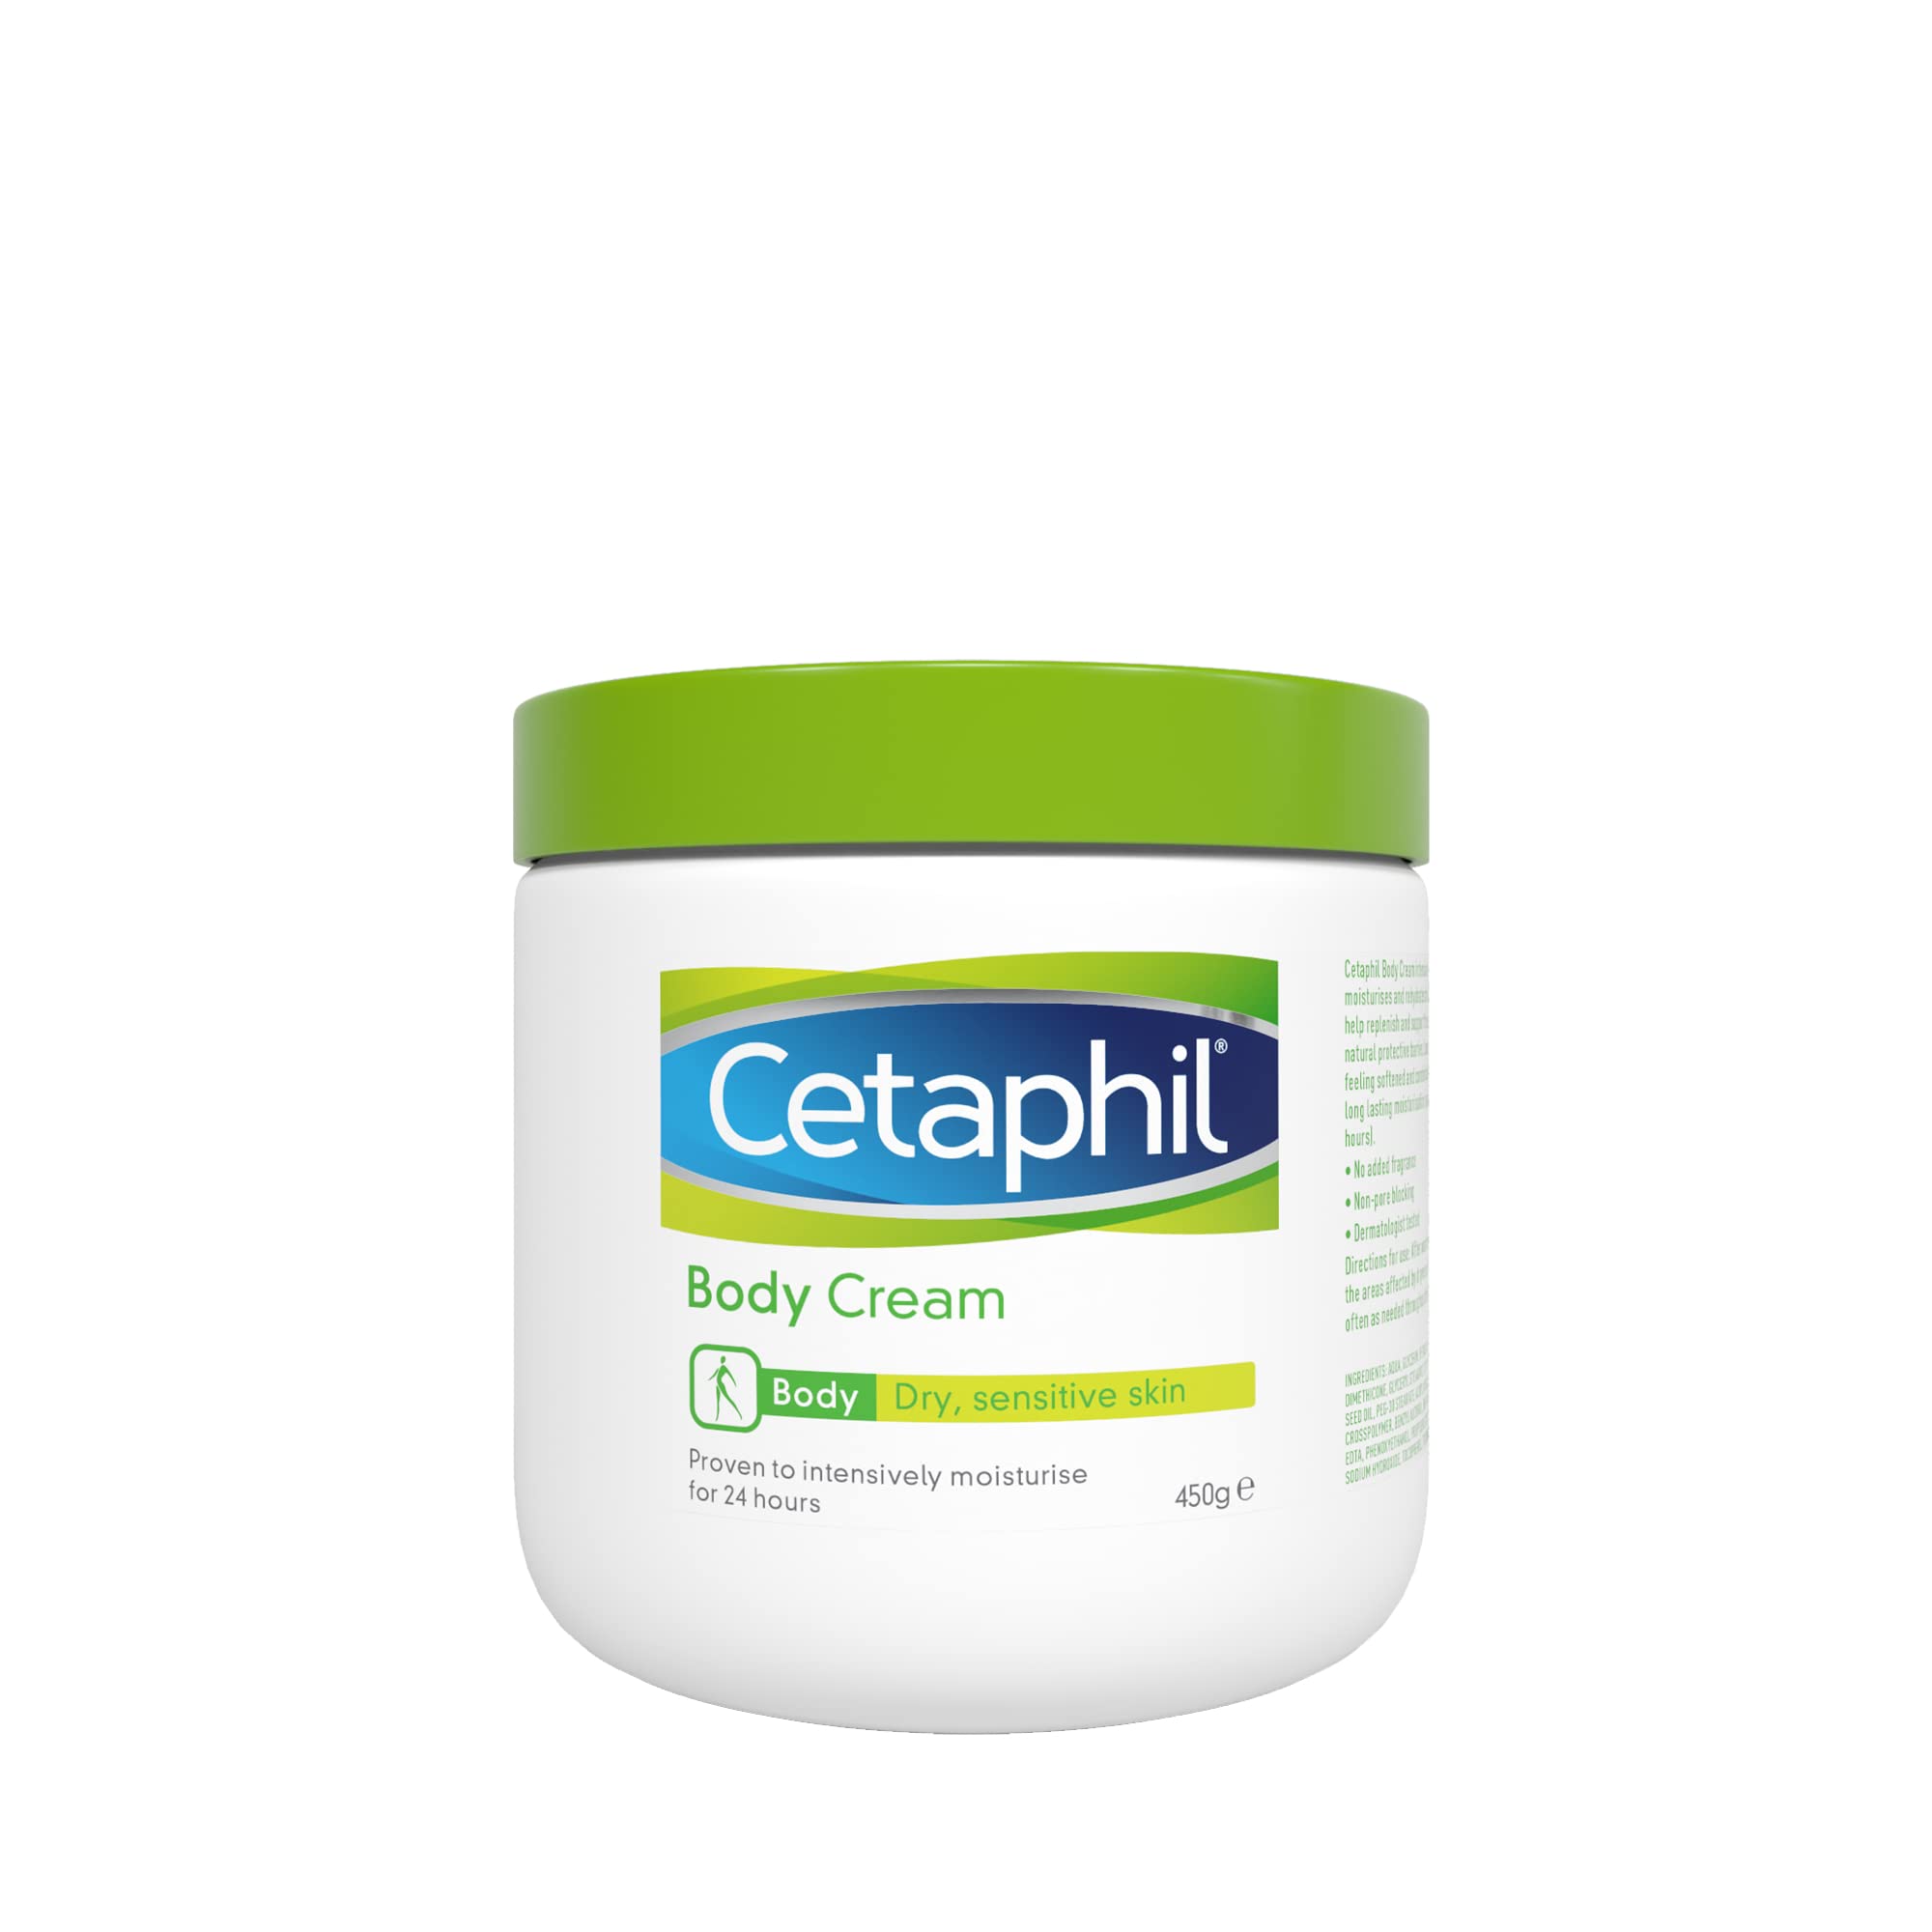 Cetaphil Body Cream Dry, Sensitive Skin 450G